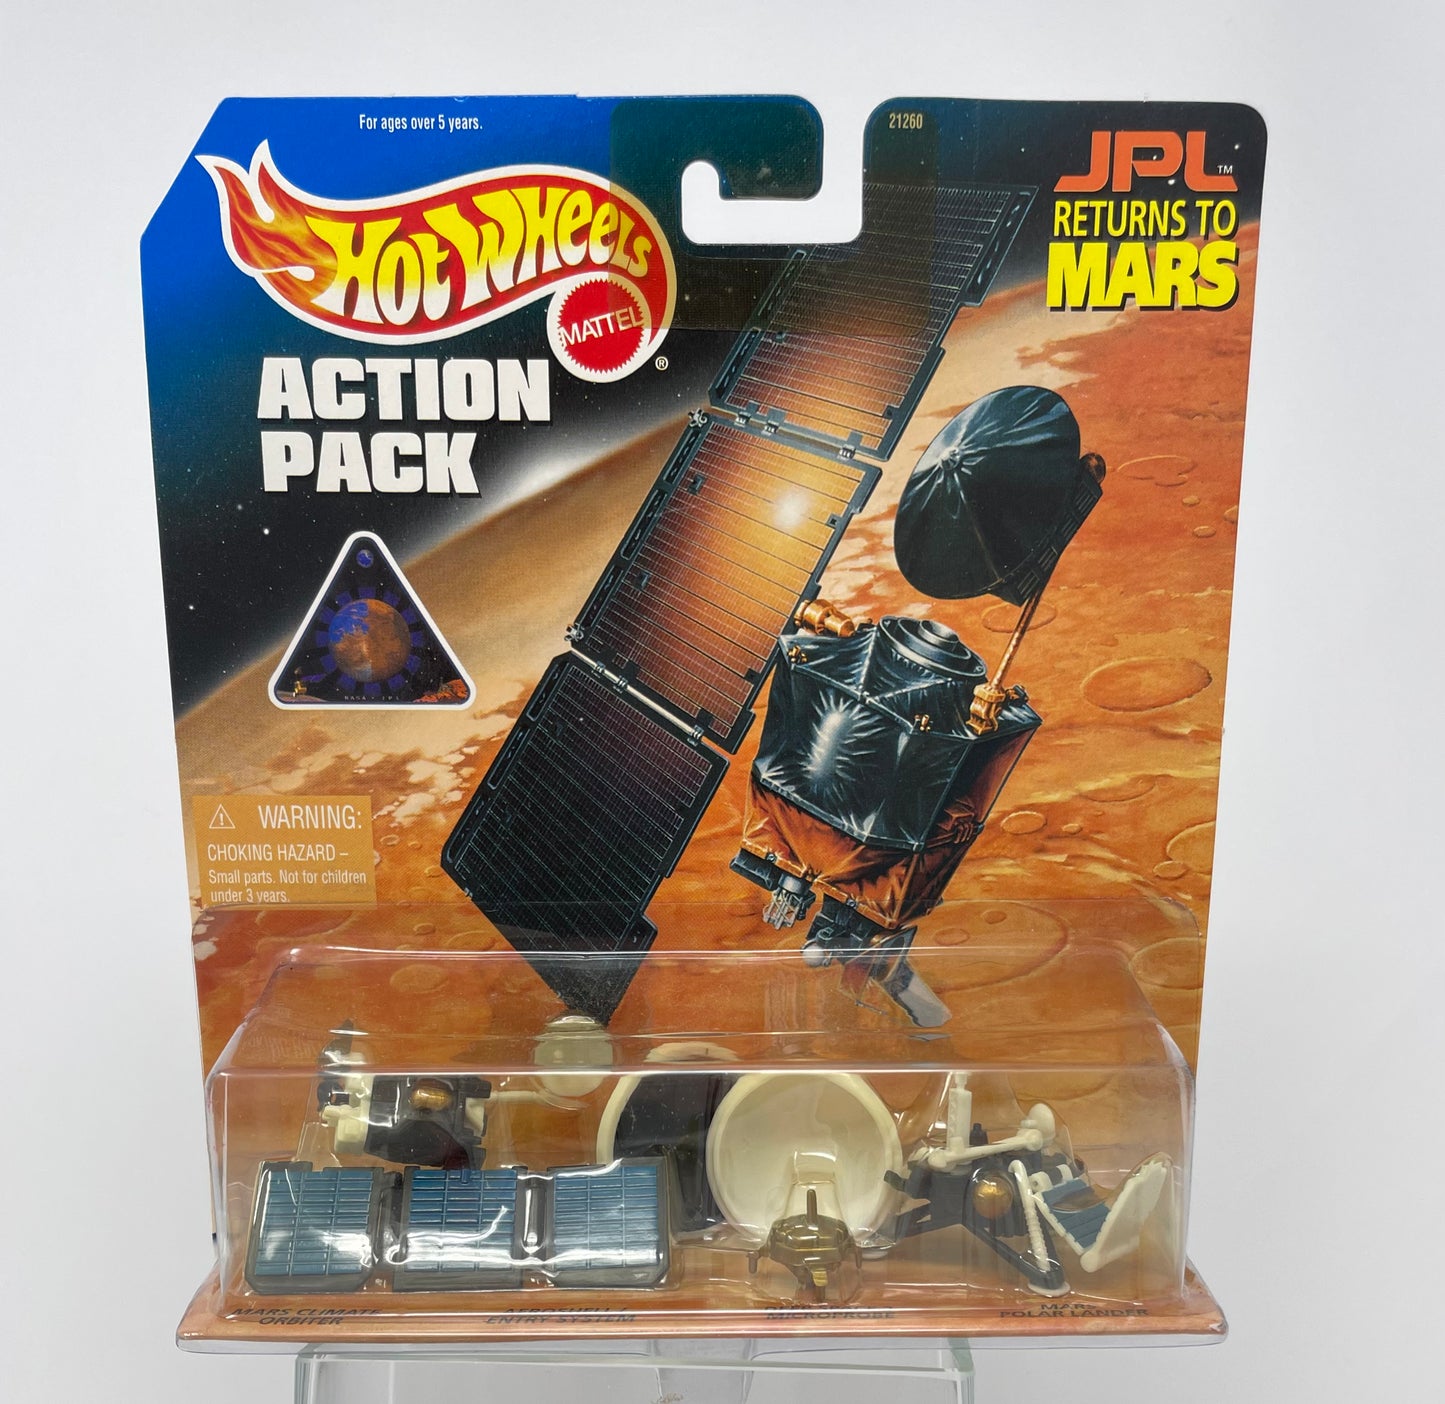 HOT WHEELS - ACTION PACK - JPL RETURNS TO MARS - #21260 - MATTEL 1999